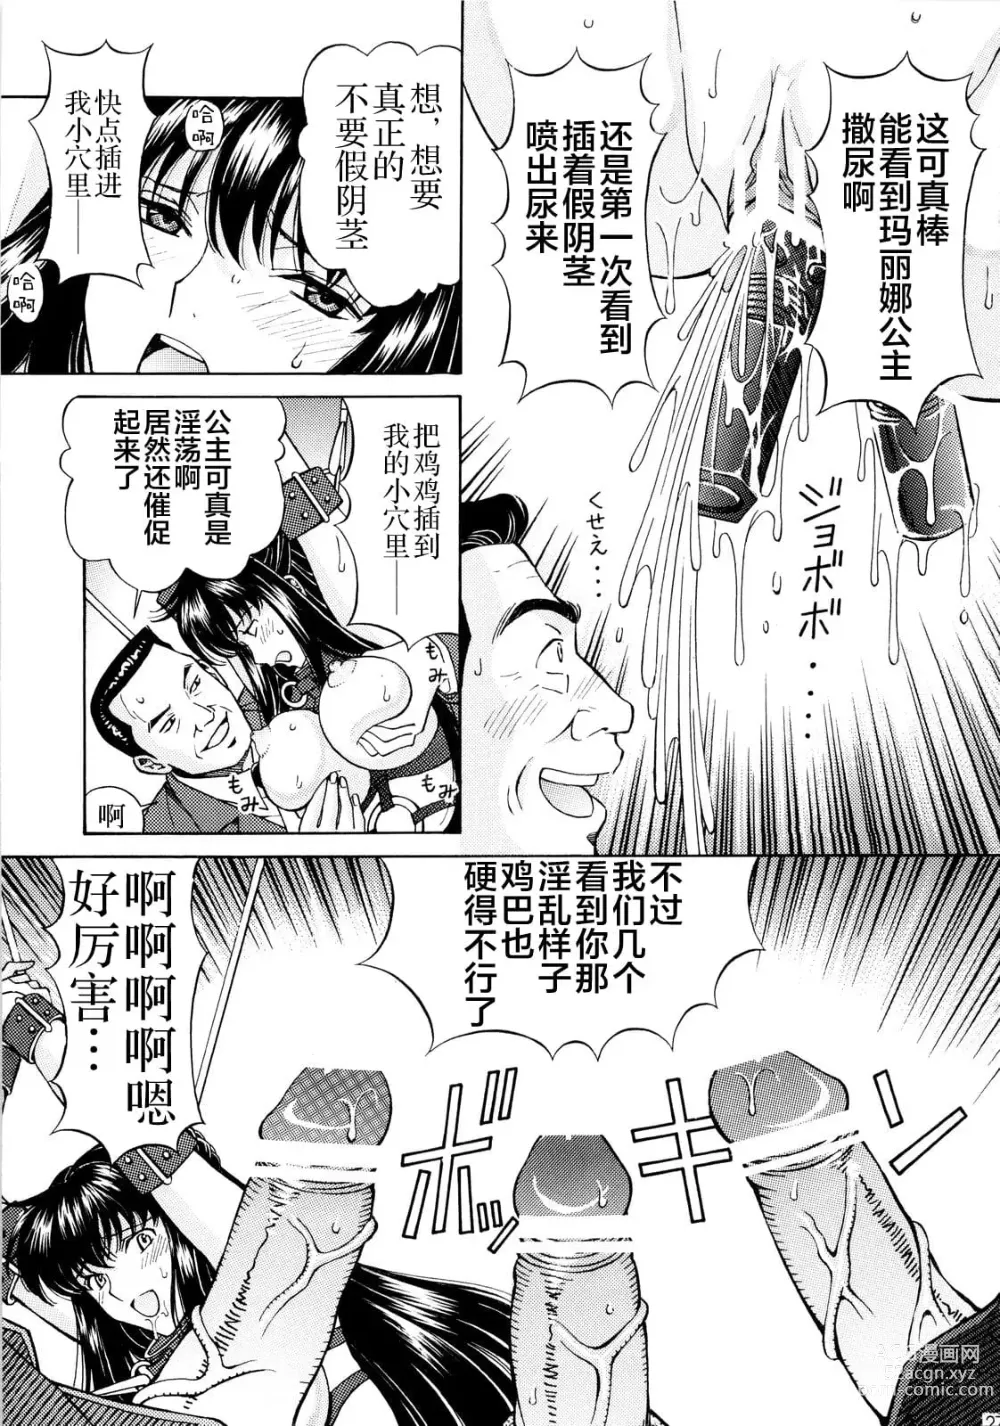 Page 26 of doujinshi Chijoku! Marina